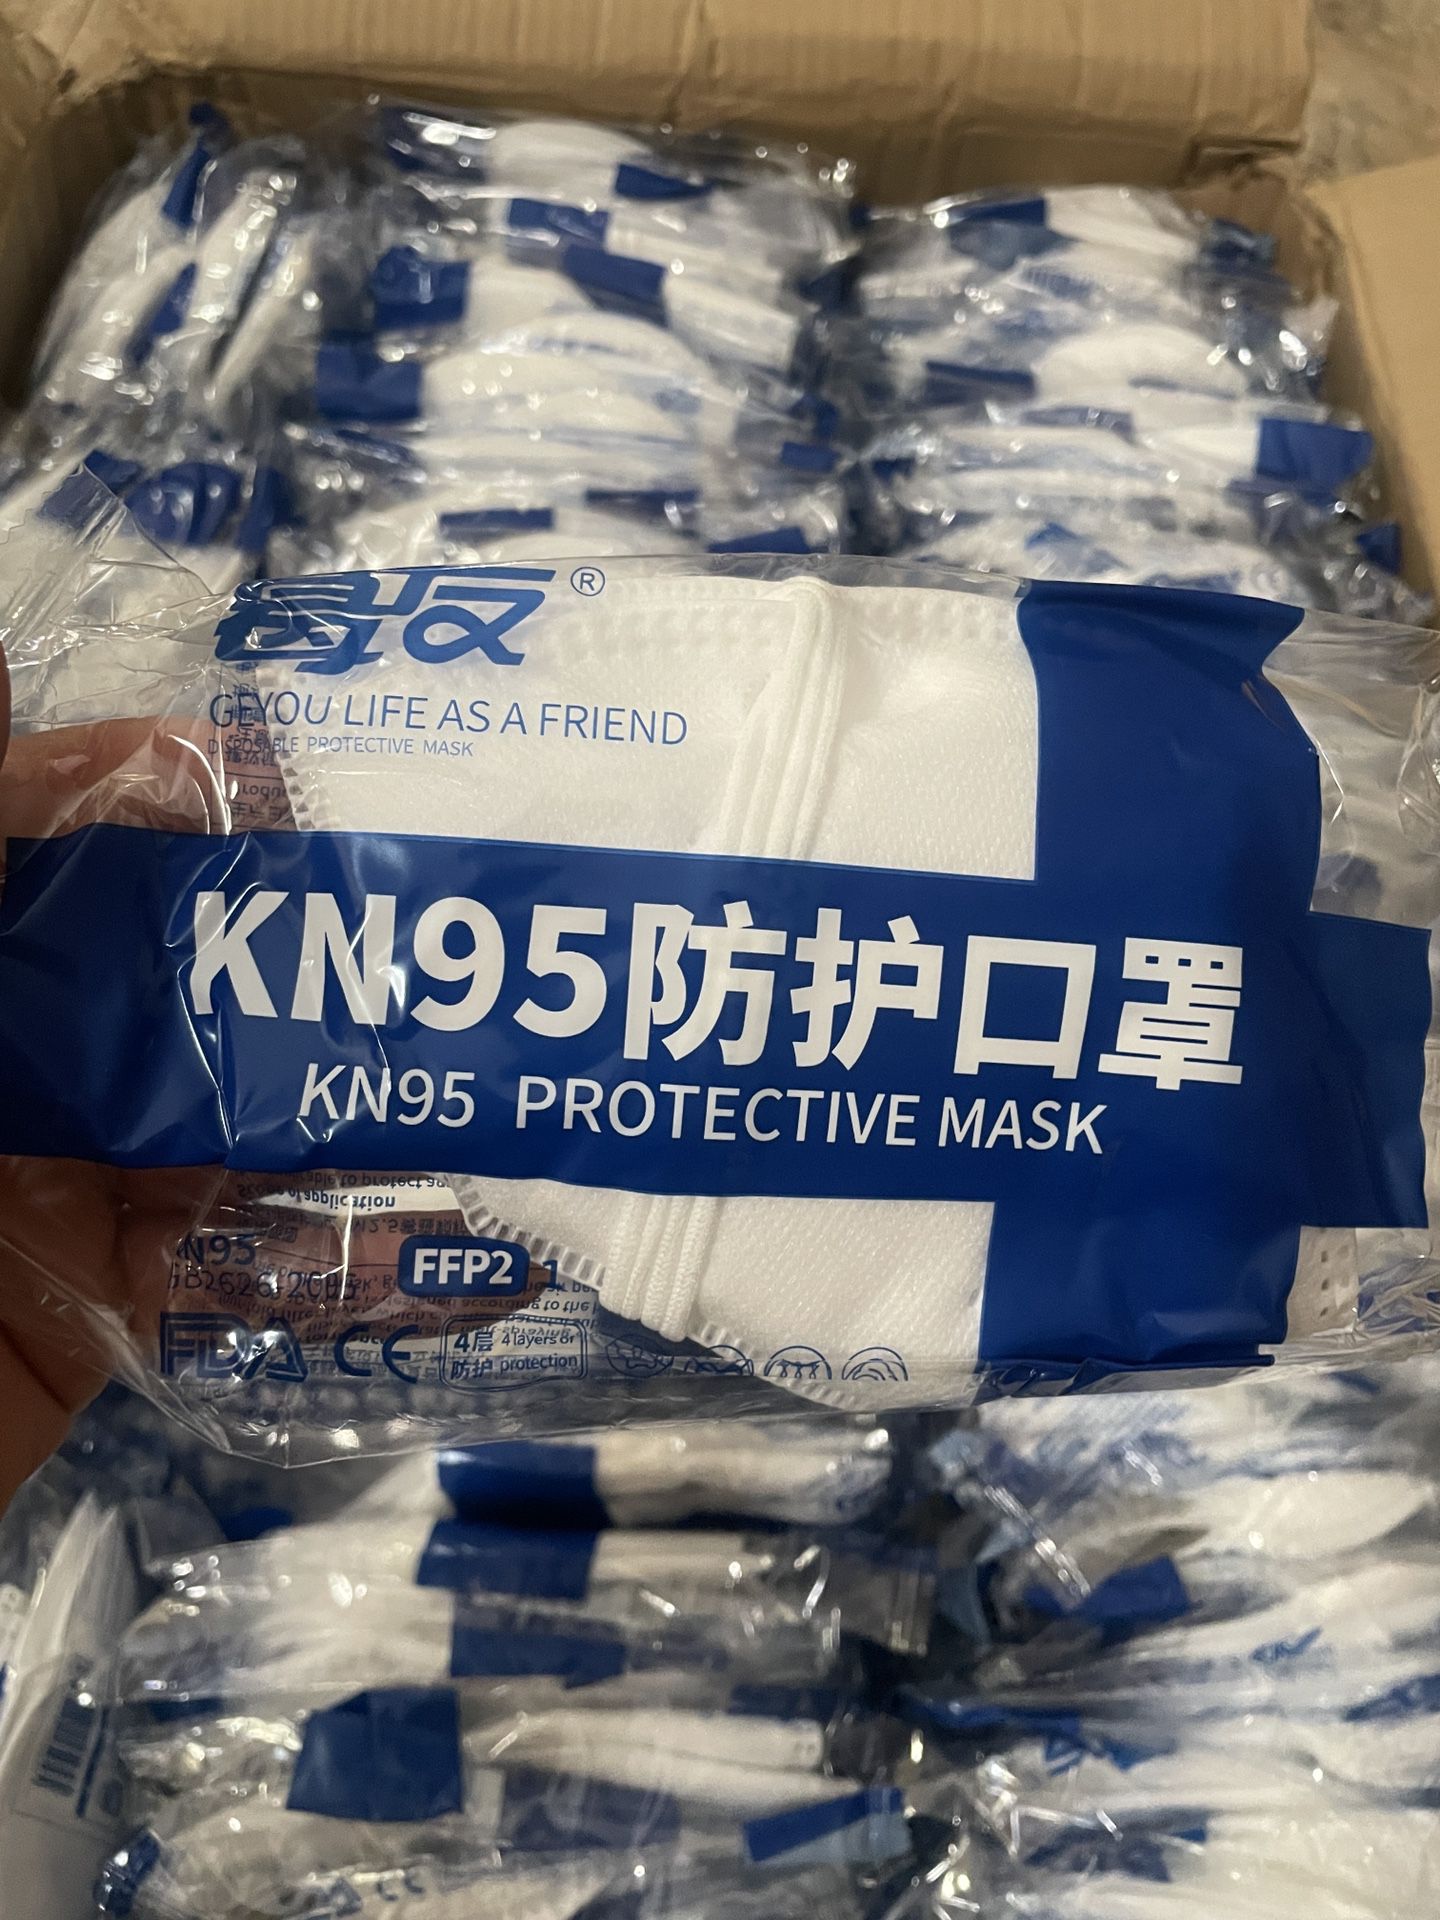 KN95 protective Masks